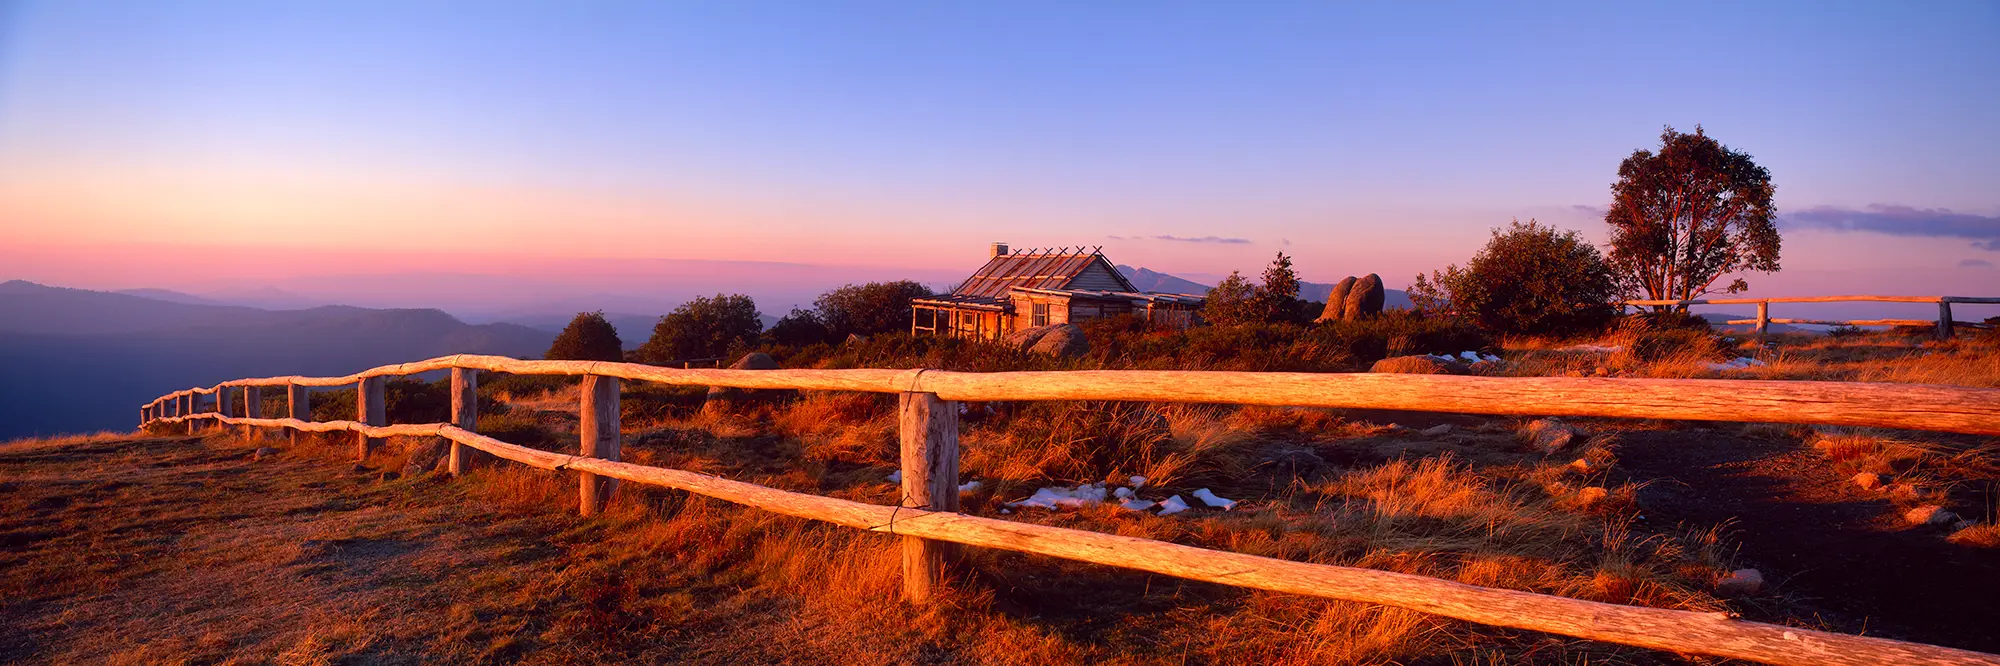 Craigs Hut Sunset Panoramic Landscape Framed Photos